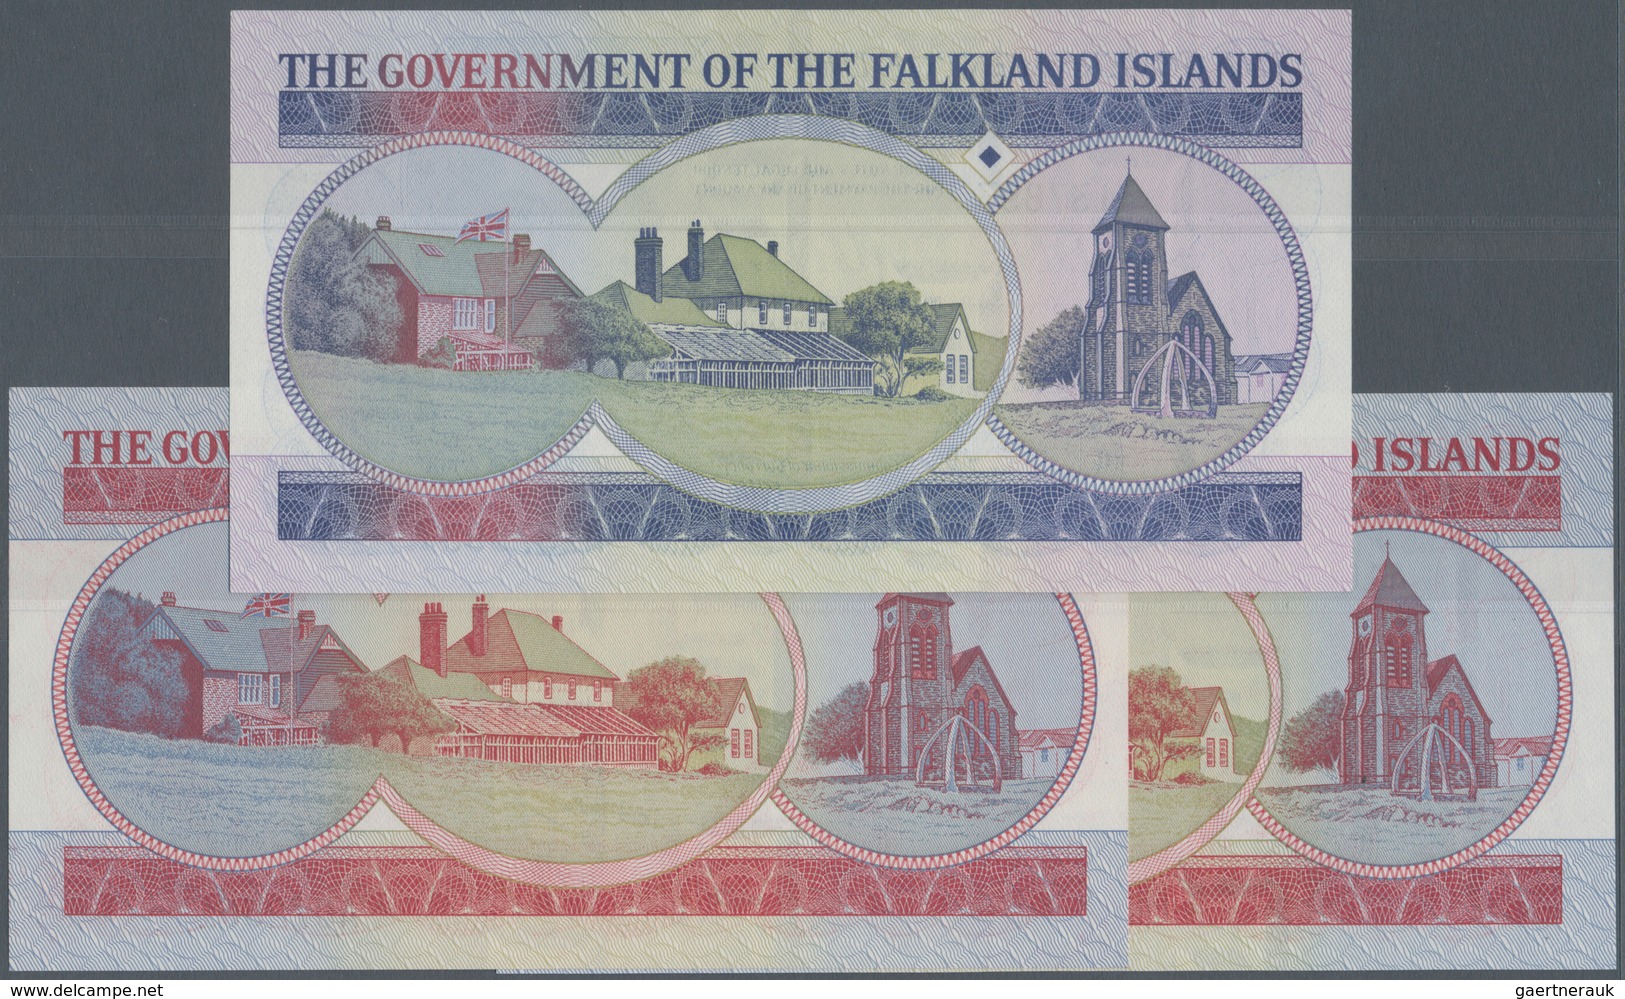 Falkland Islands / Falkland Inseln: Set 3 Notes Containing 2x 1 Pound 1983 P. 12 (UNC) And 1 Pound 1 - Falkland